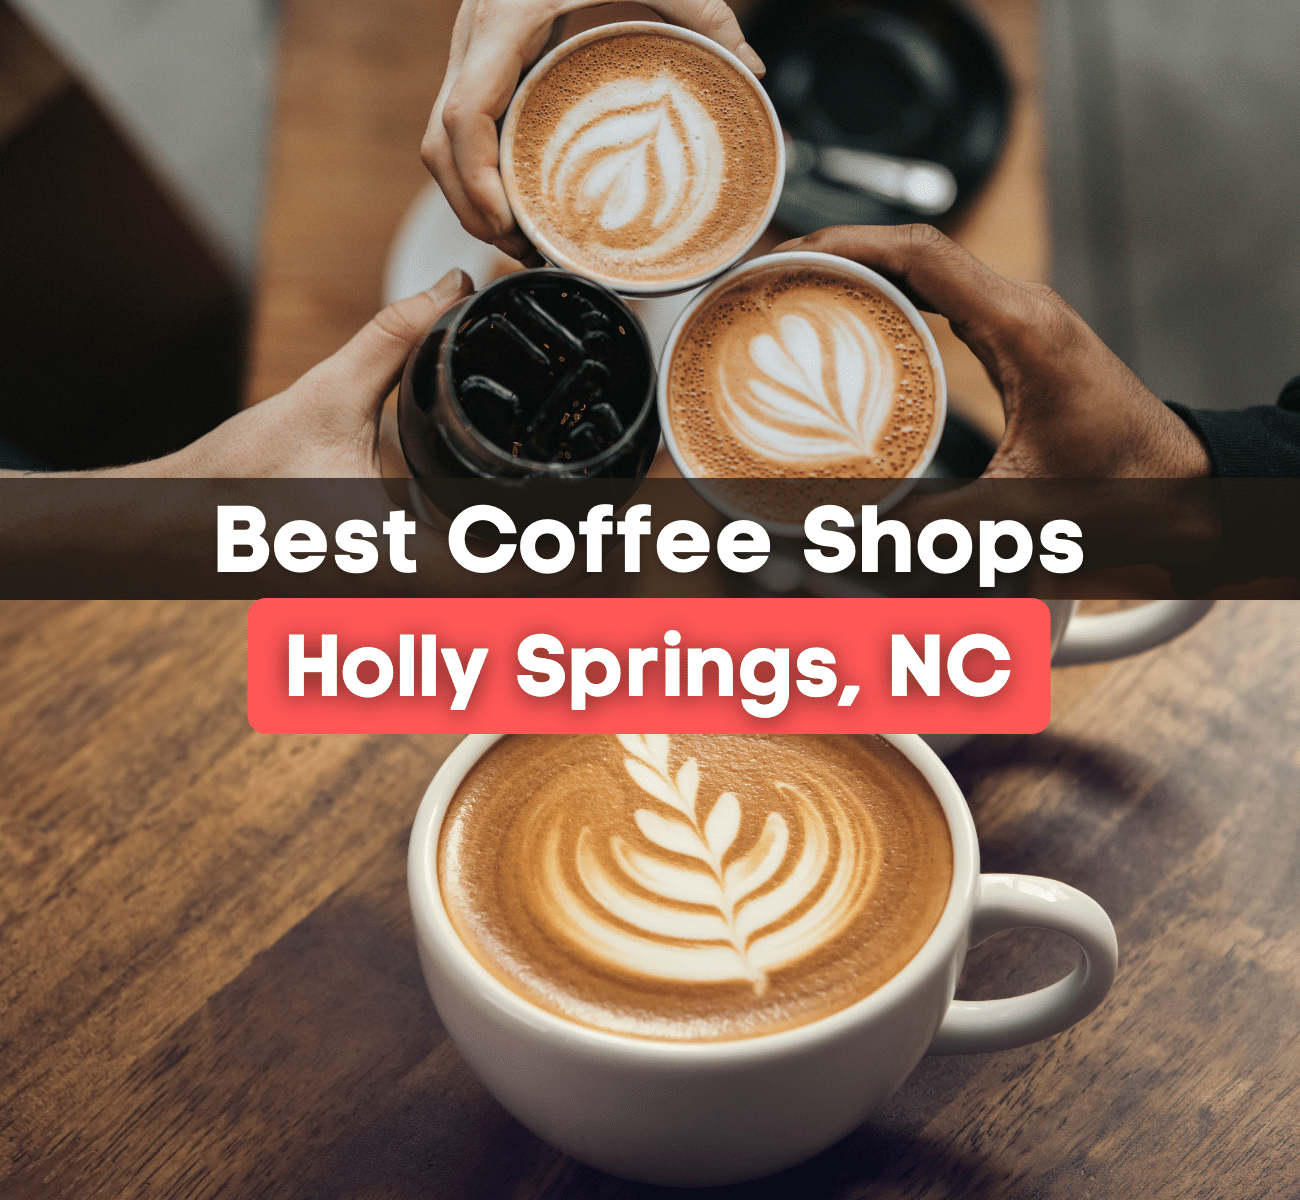 Best Coffee Shops in Holly Springs, NC